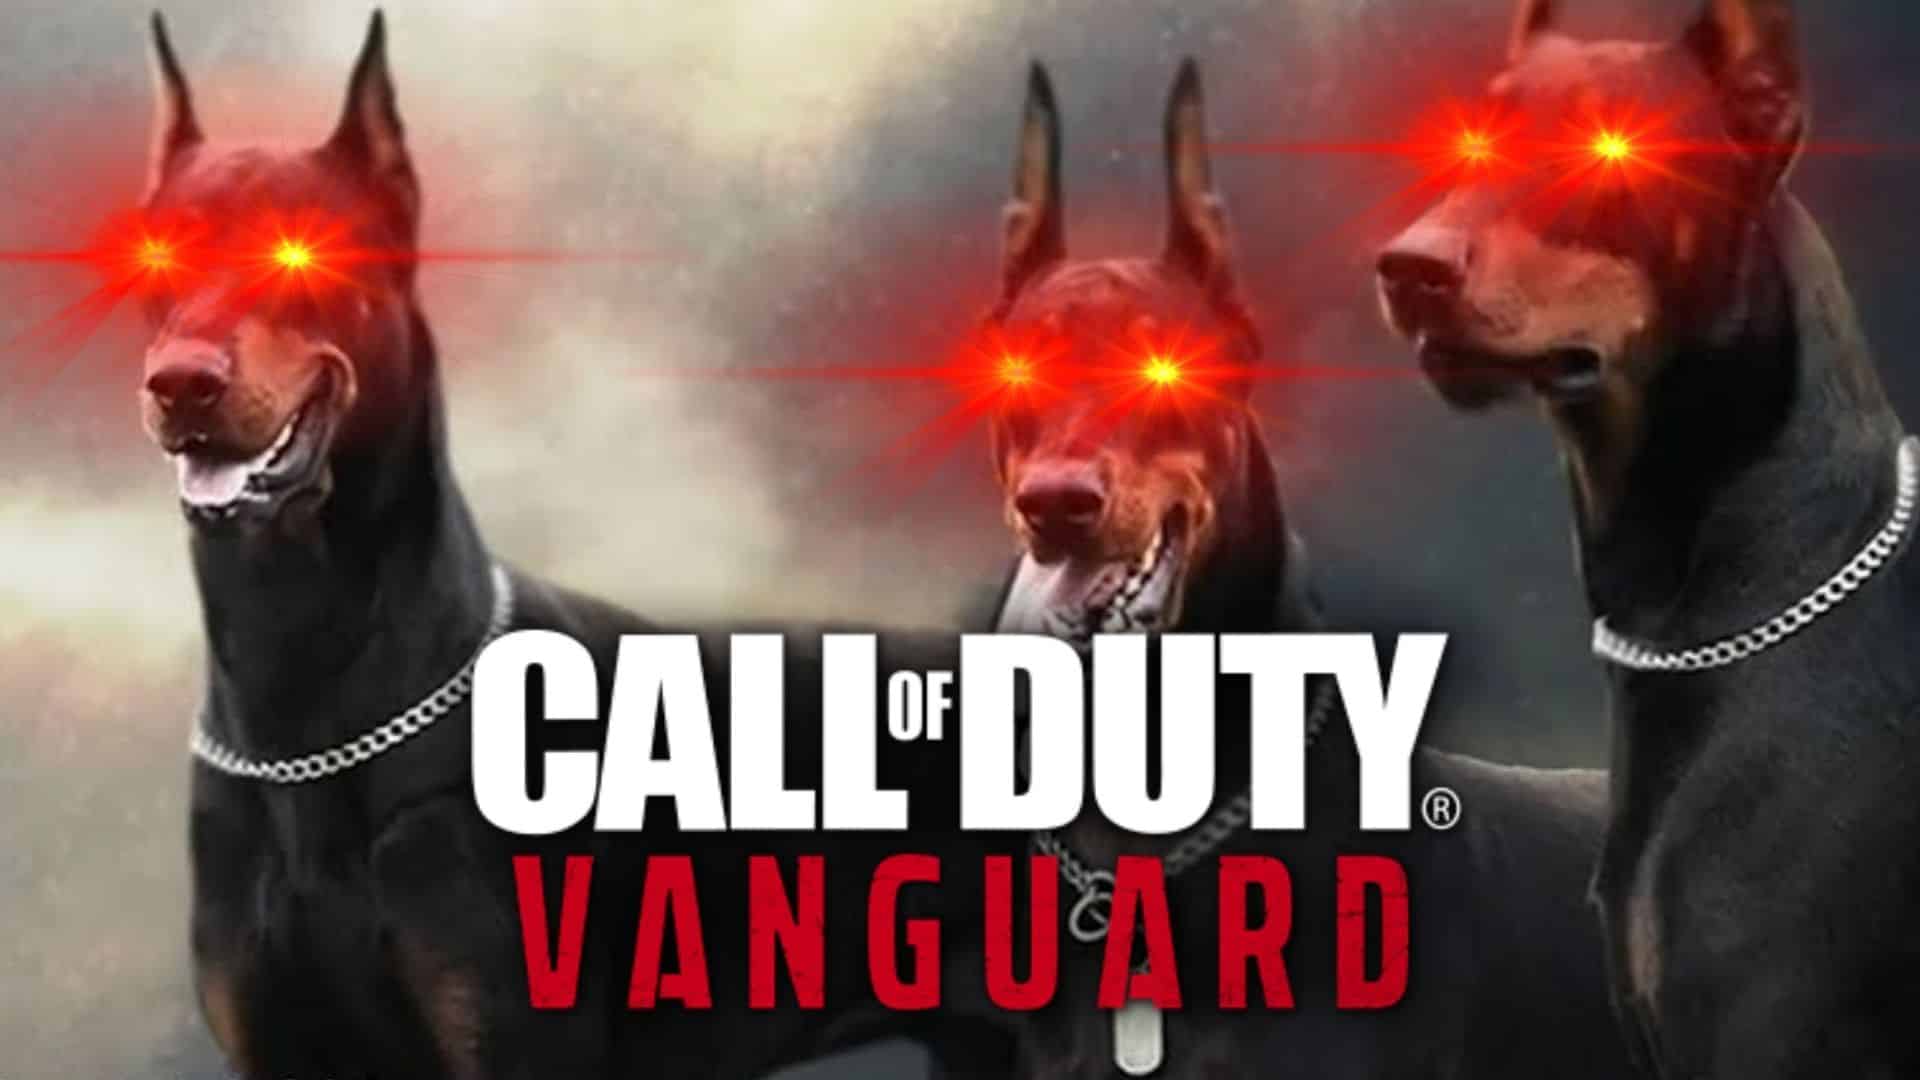 vanguard dogs